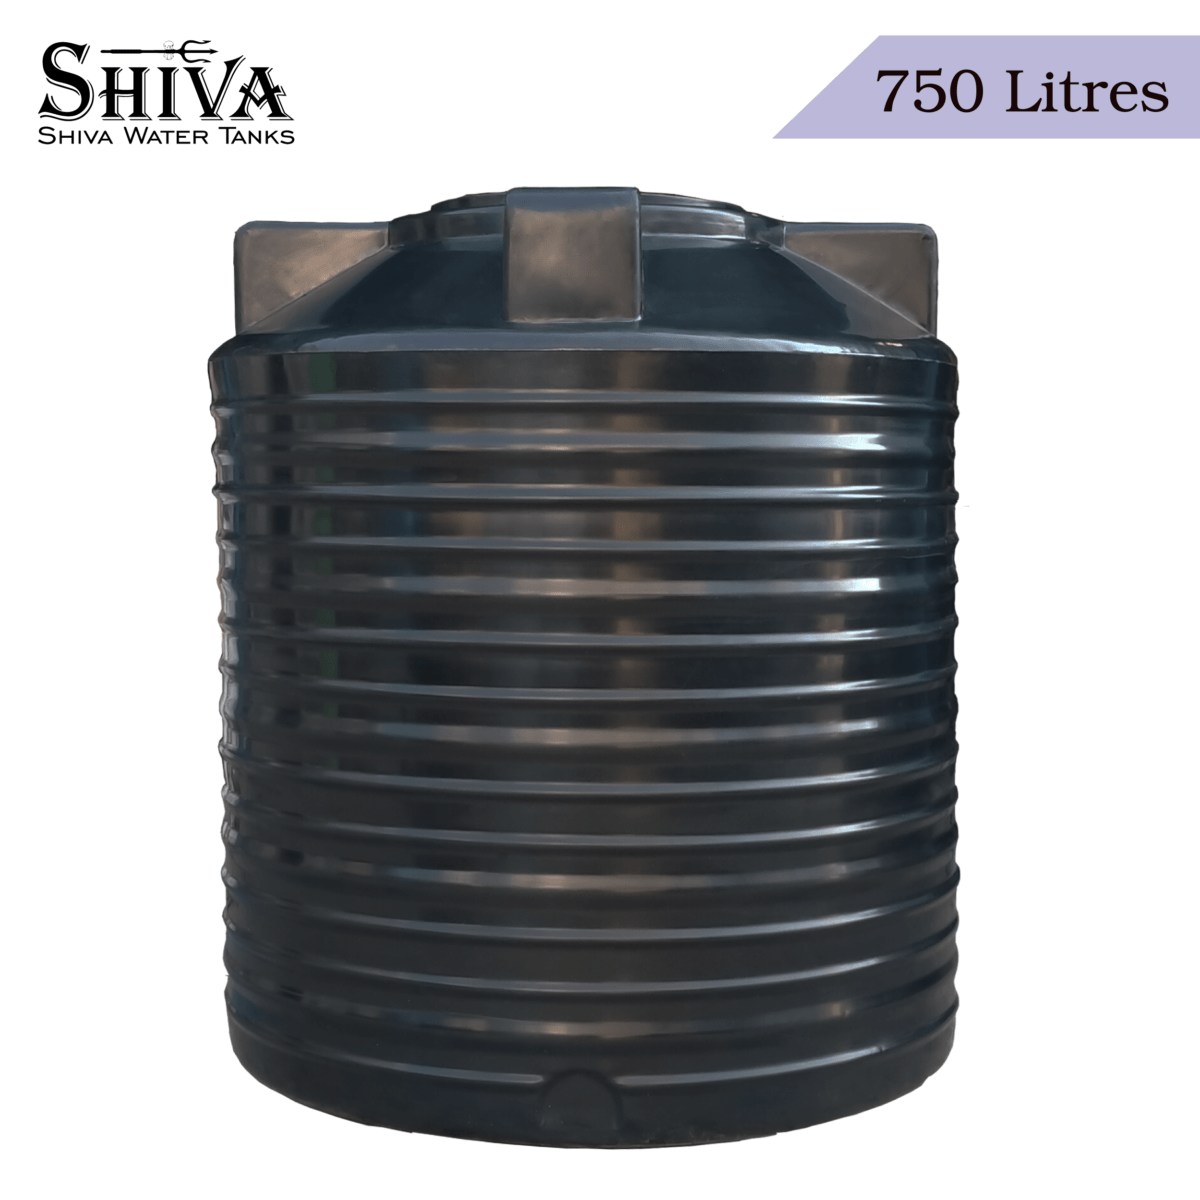 750 Litres - SHIVA Plus - 2 Layers